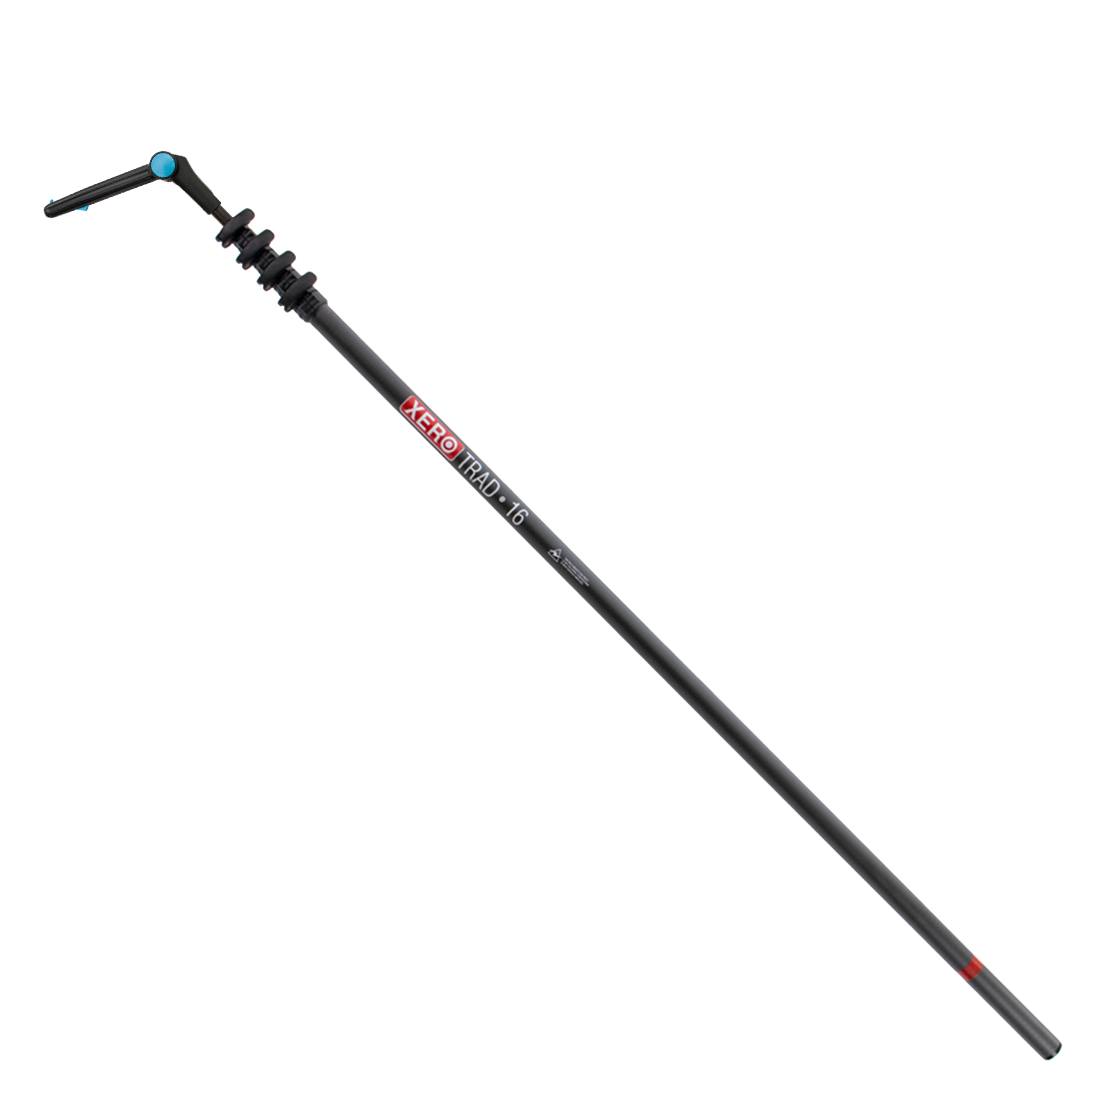 XERO Carbon Fiber Pole - Trad Pole 2.0 - Dr Angle Tip - Black - 16 Foot - Full View